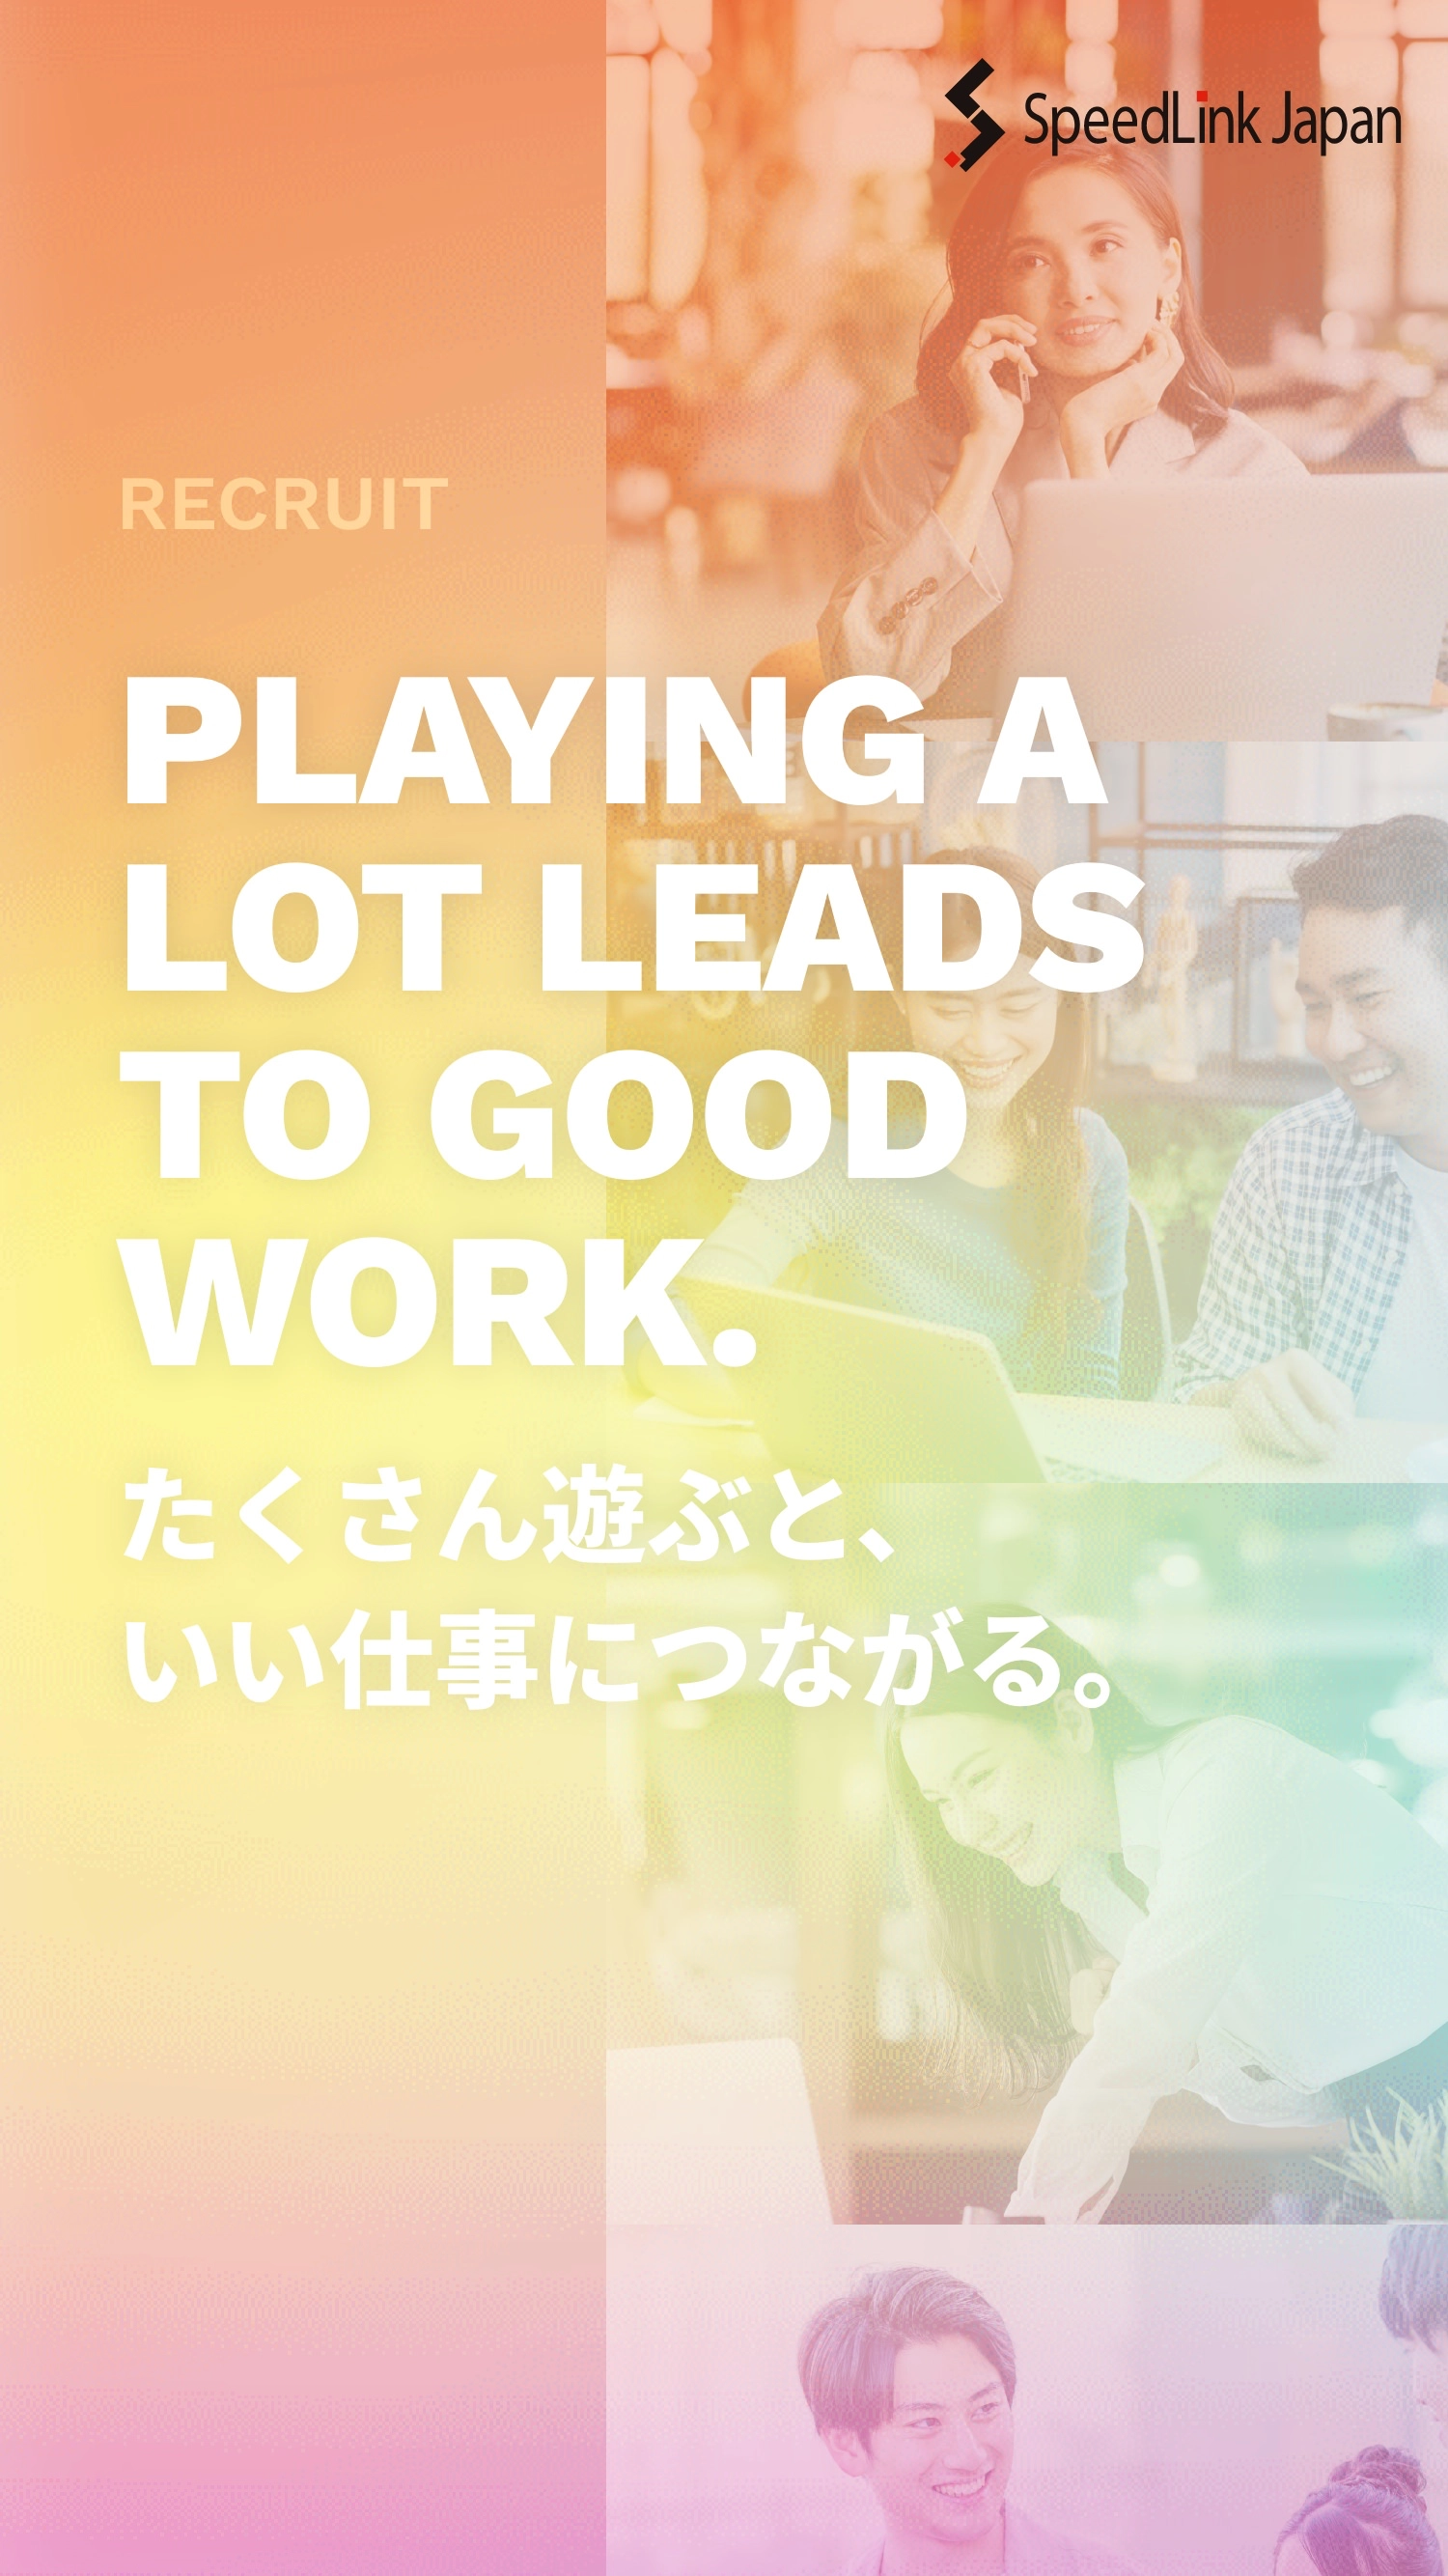 Playing a lot leads to good work. - たくさん遊ぶと、いい仕事につながる。